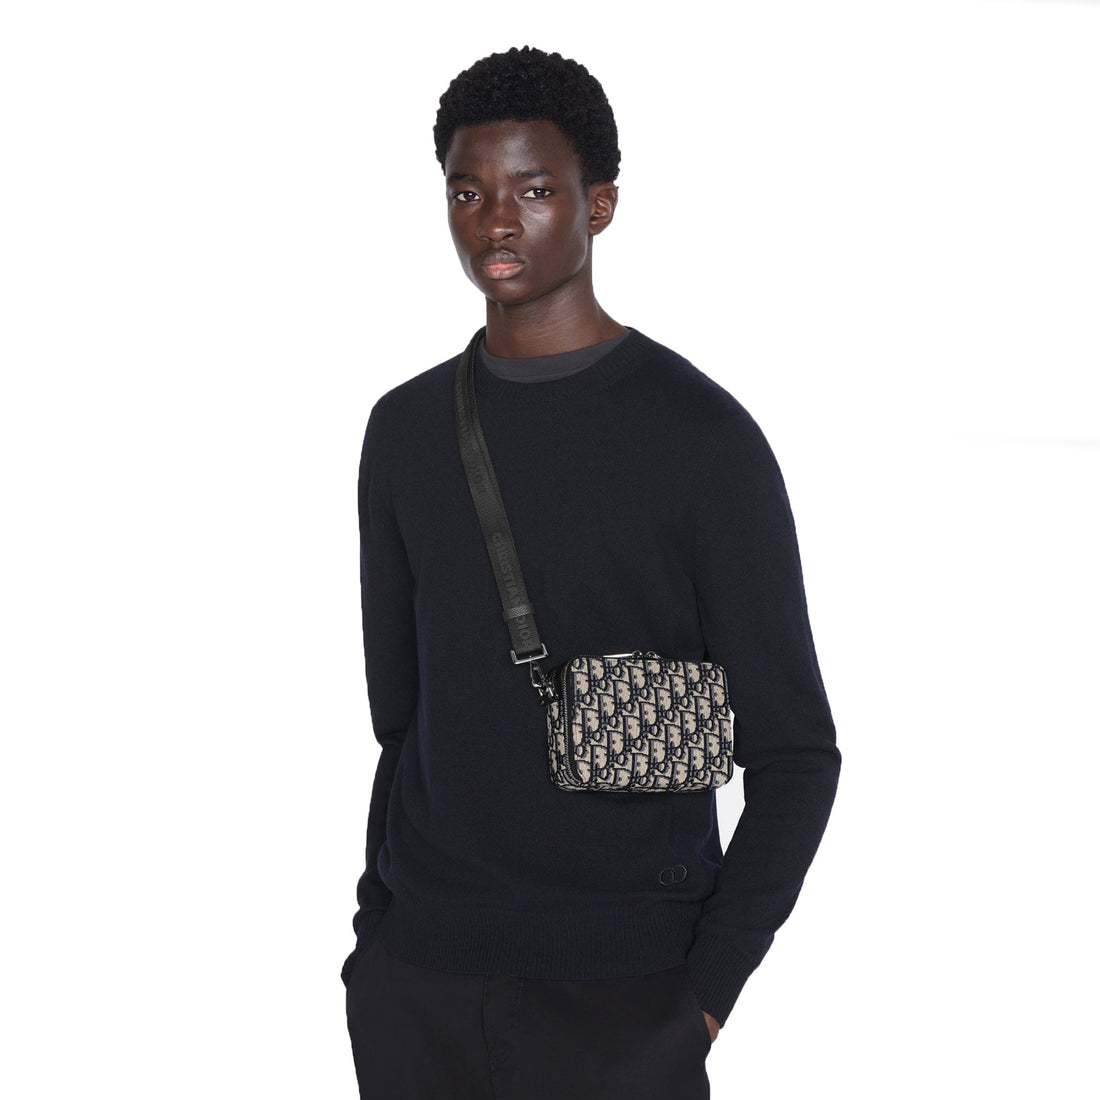 Dior Oblique Jacquard Messenger bag – CnExclusives